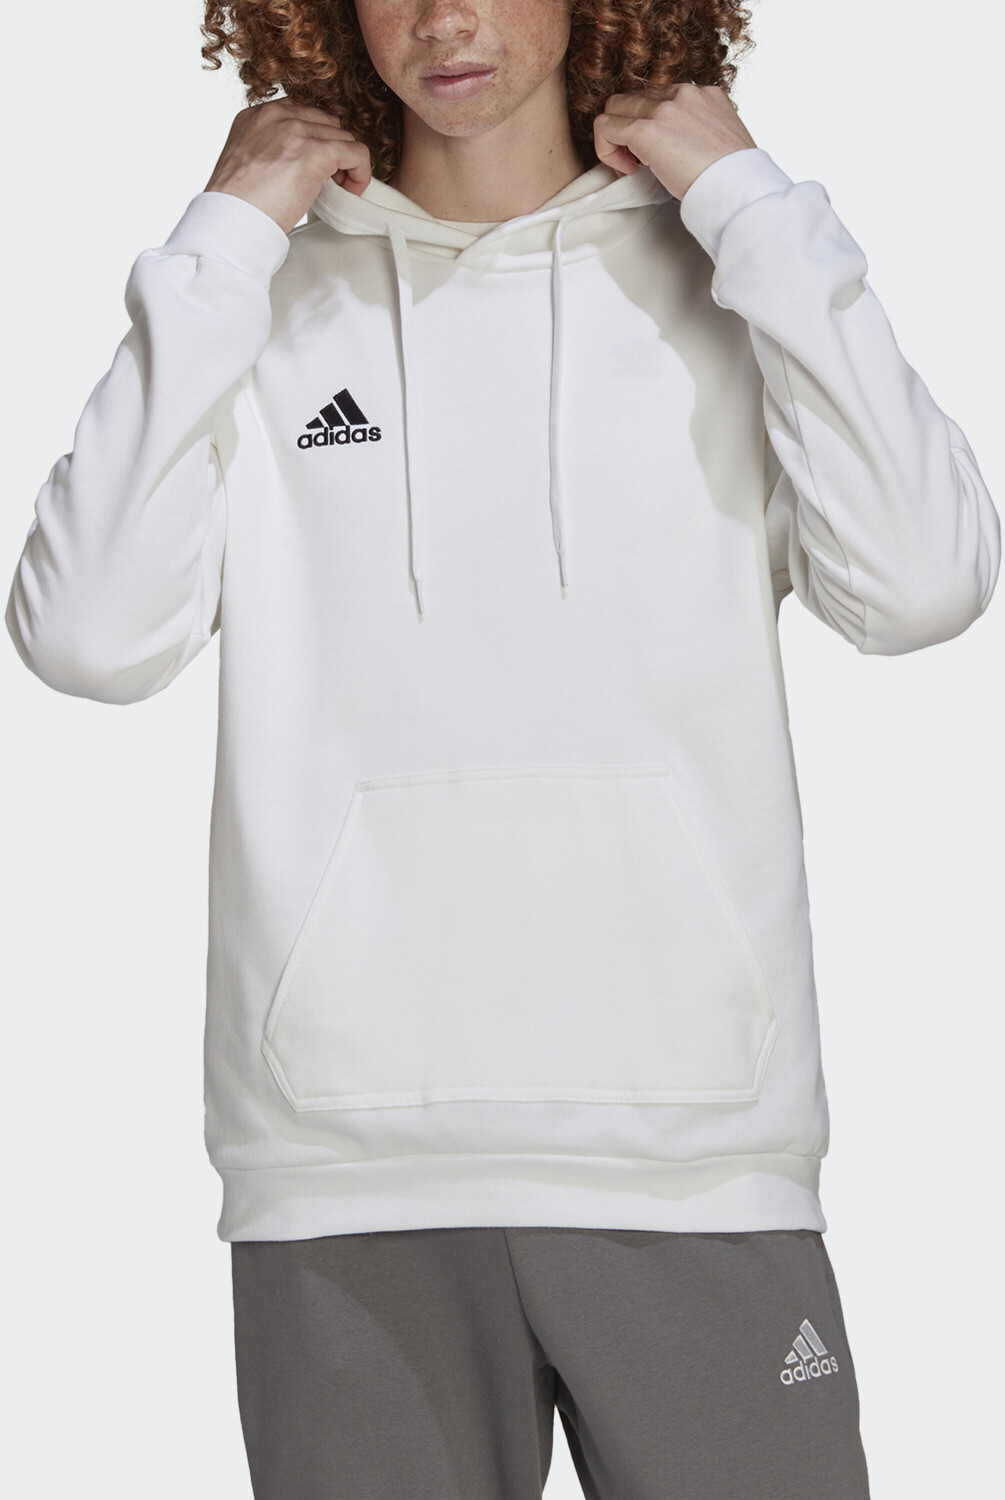 22 (HG6302) | Football Sweat 23,45 ab € Adidas Hoodie white bei Preisvergleich Entrada